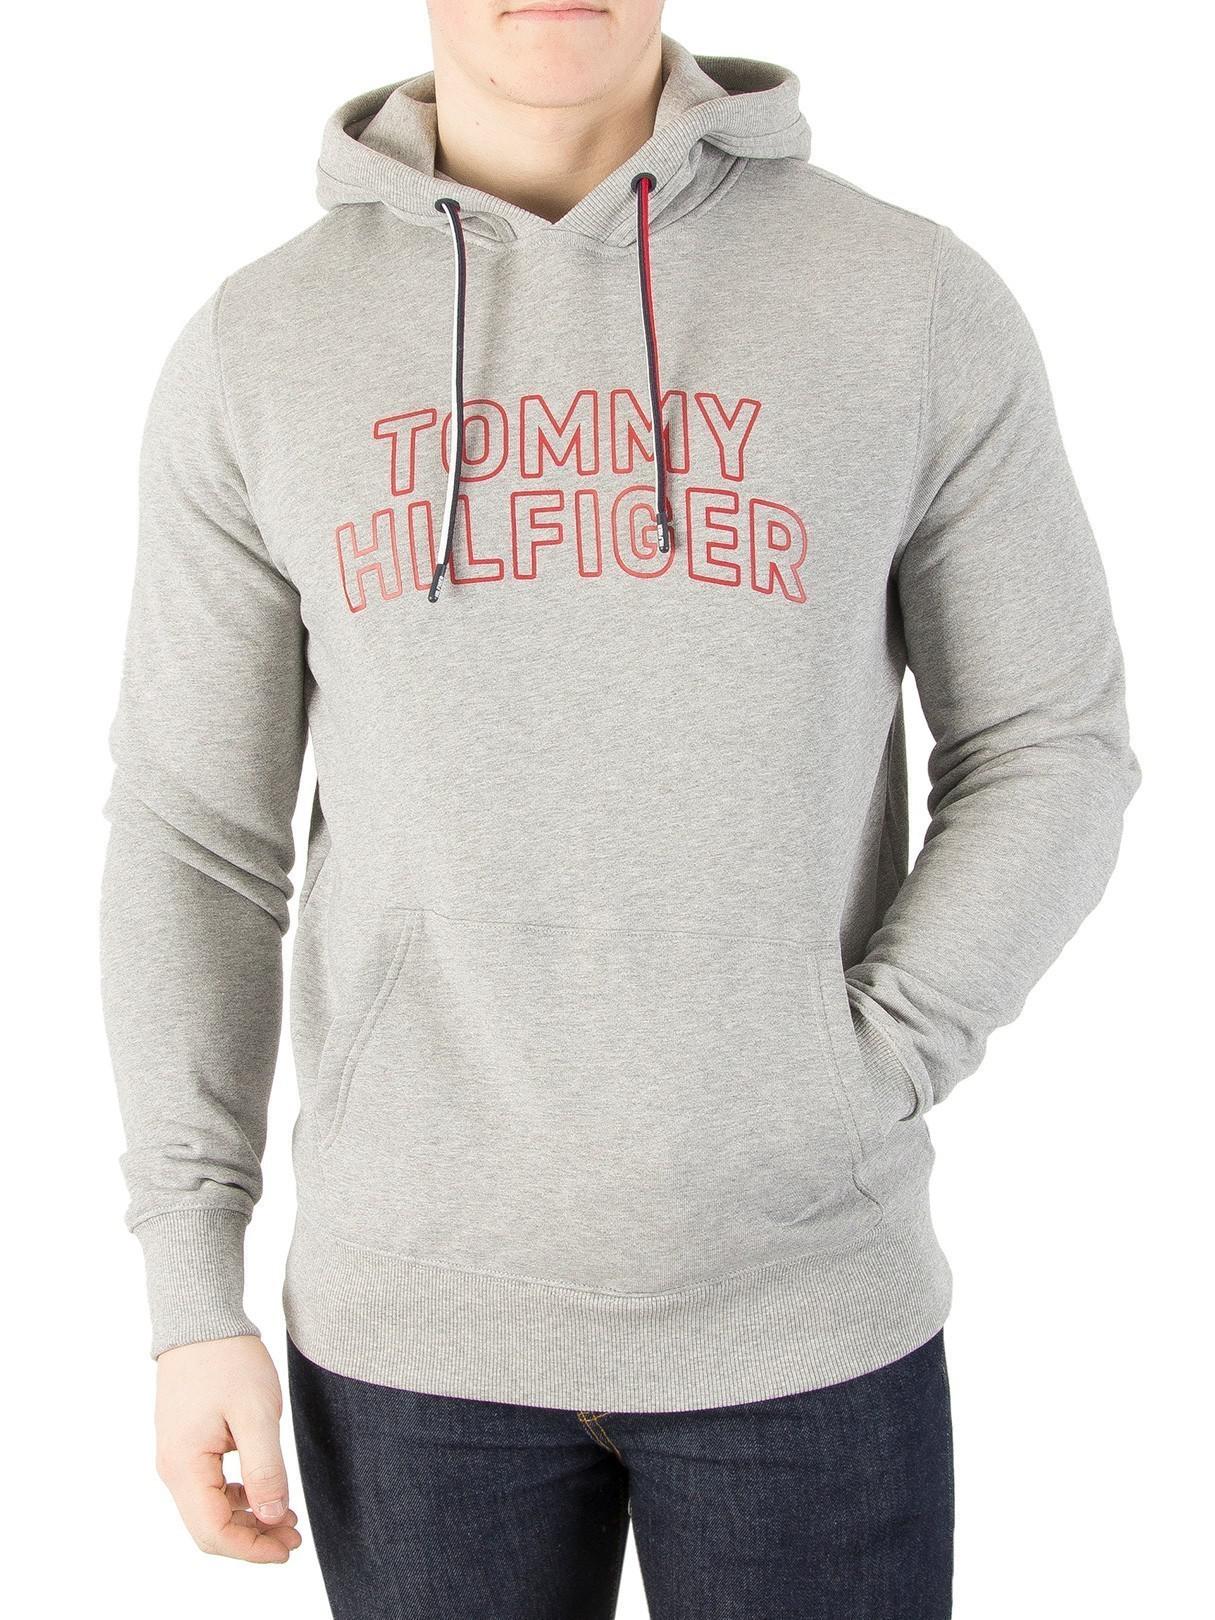 tommy hilfiger logo hoodie grey